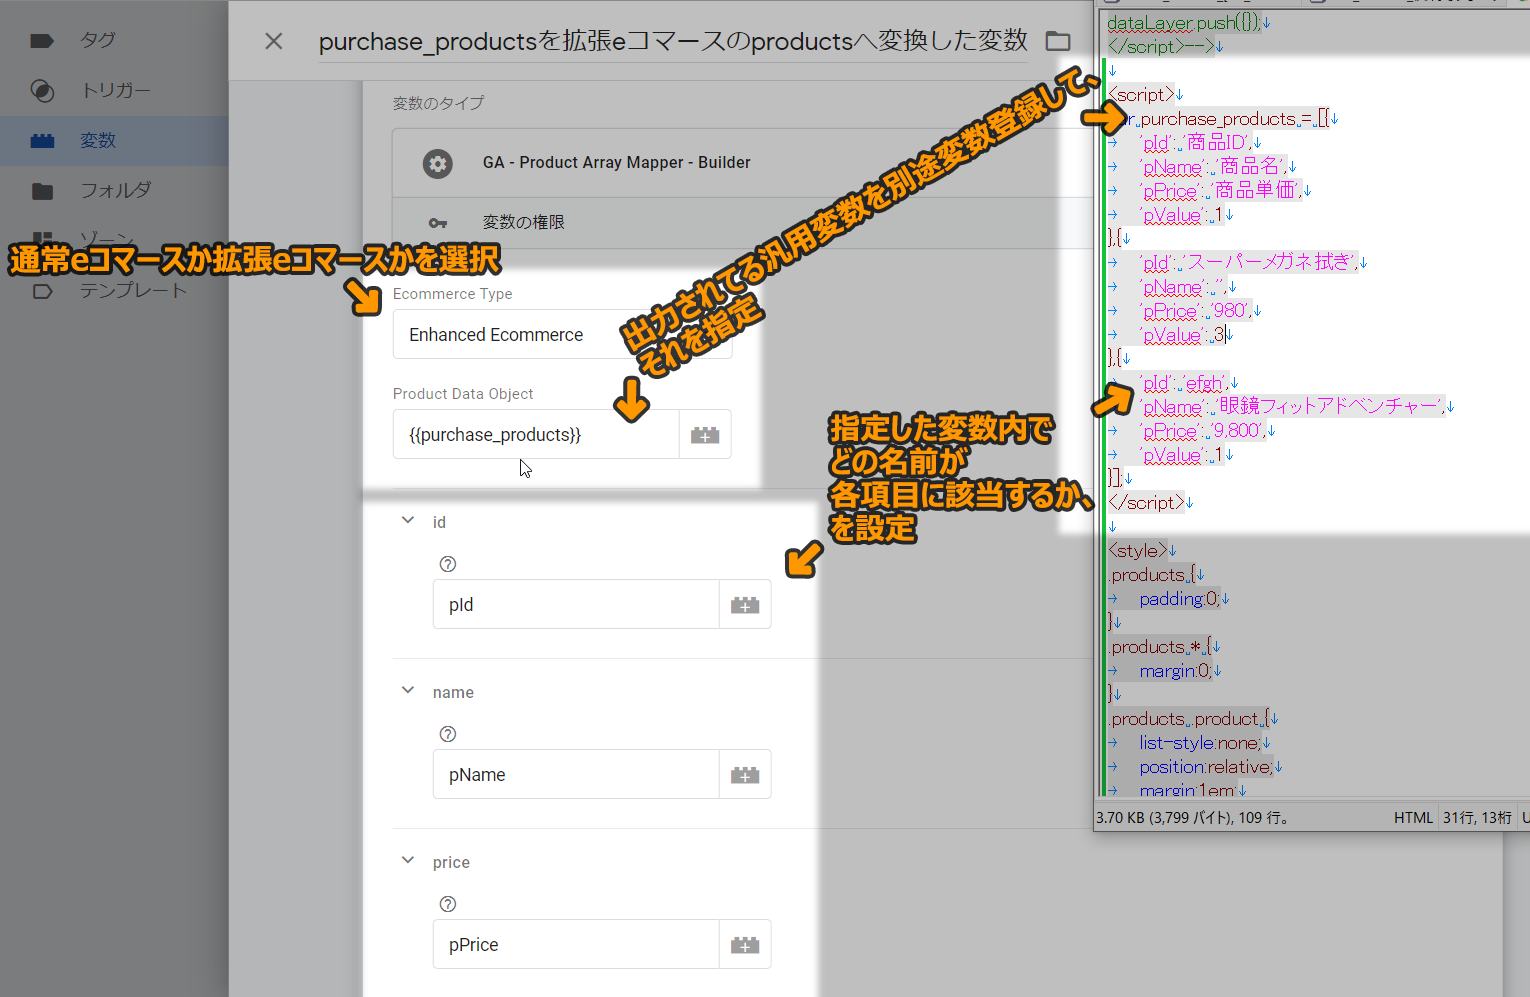 GA - Product Array Mapper - Builderの変数登録画面例